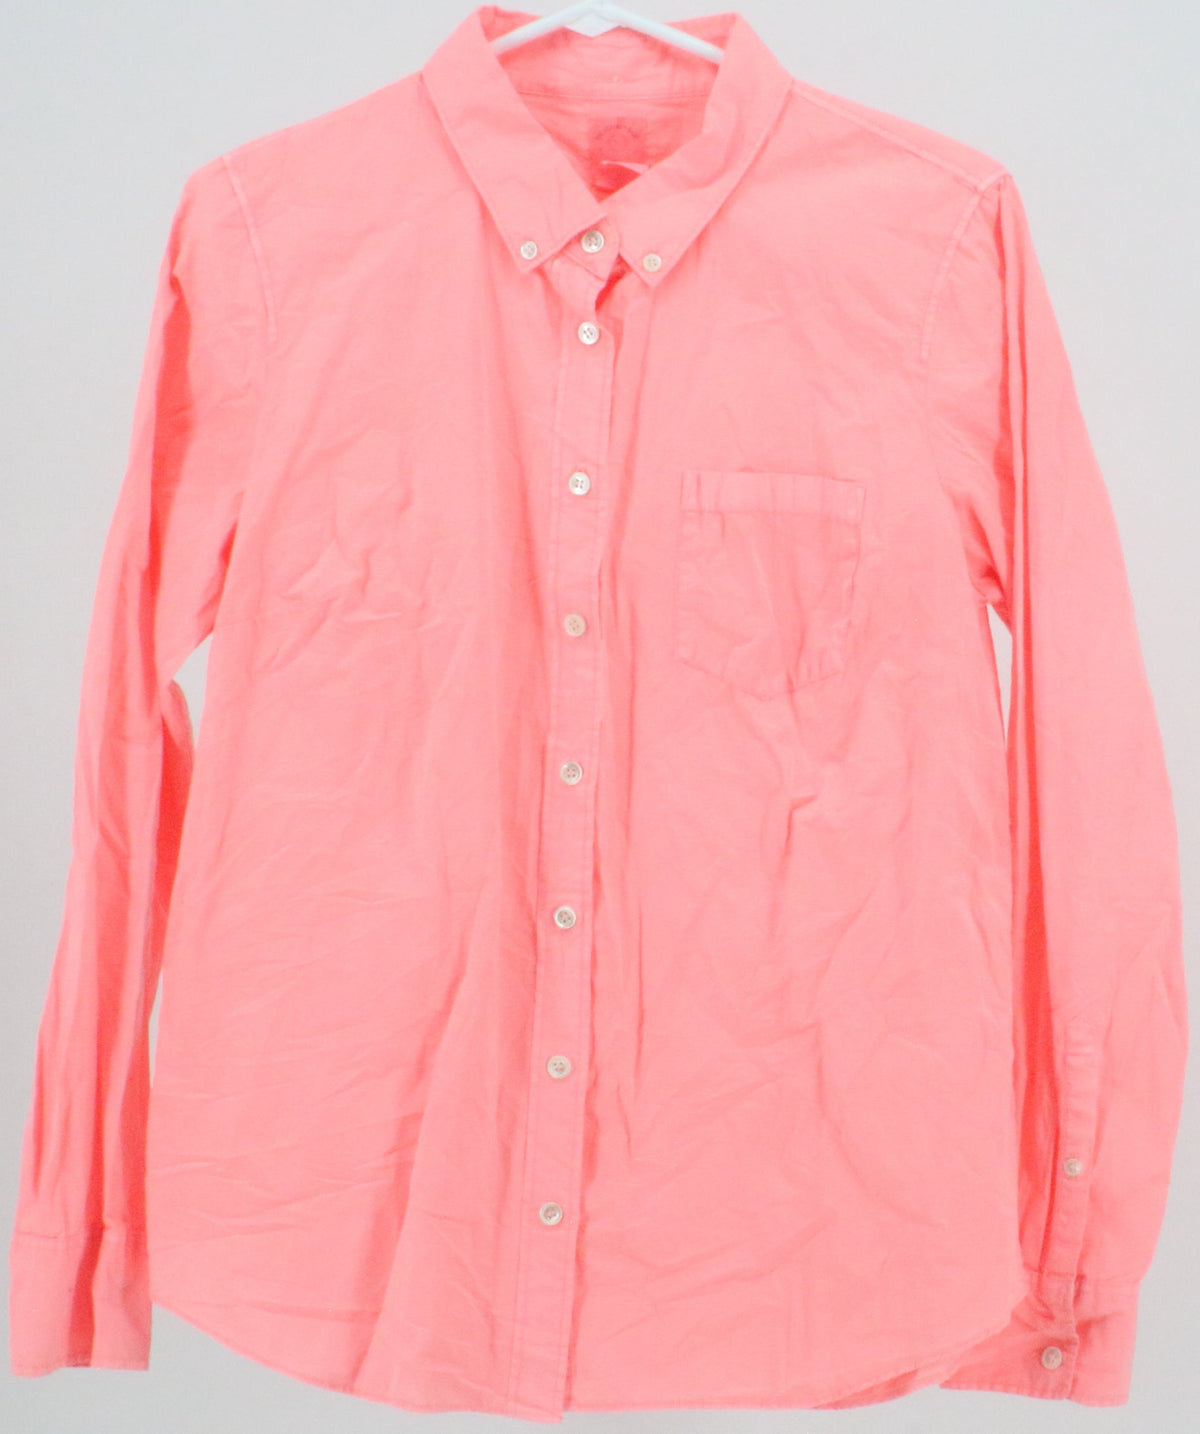 J Crew Pink Cotton Shirt